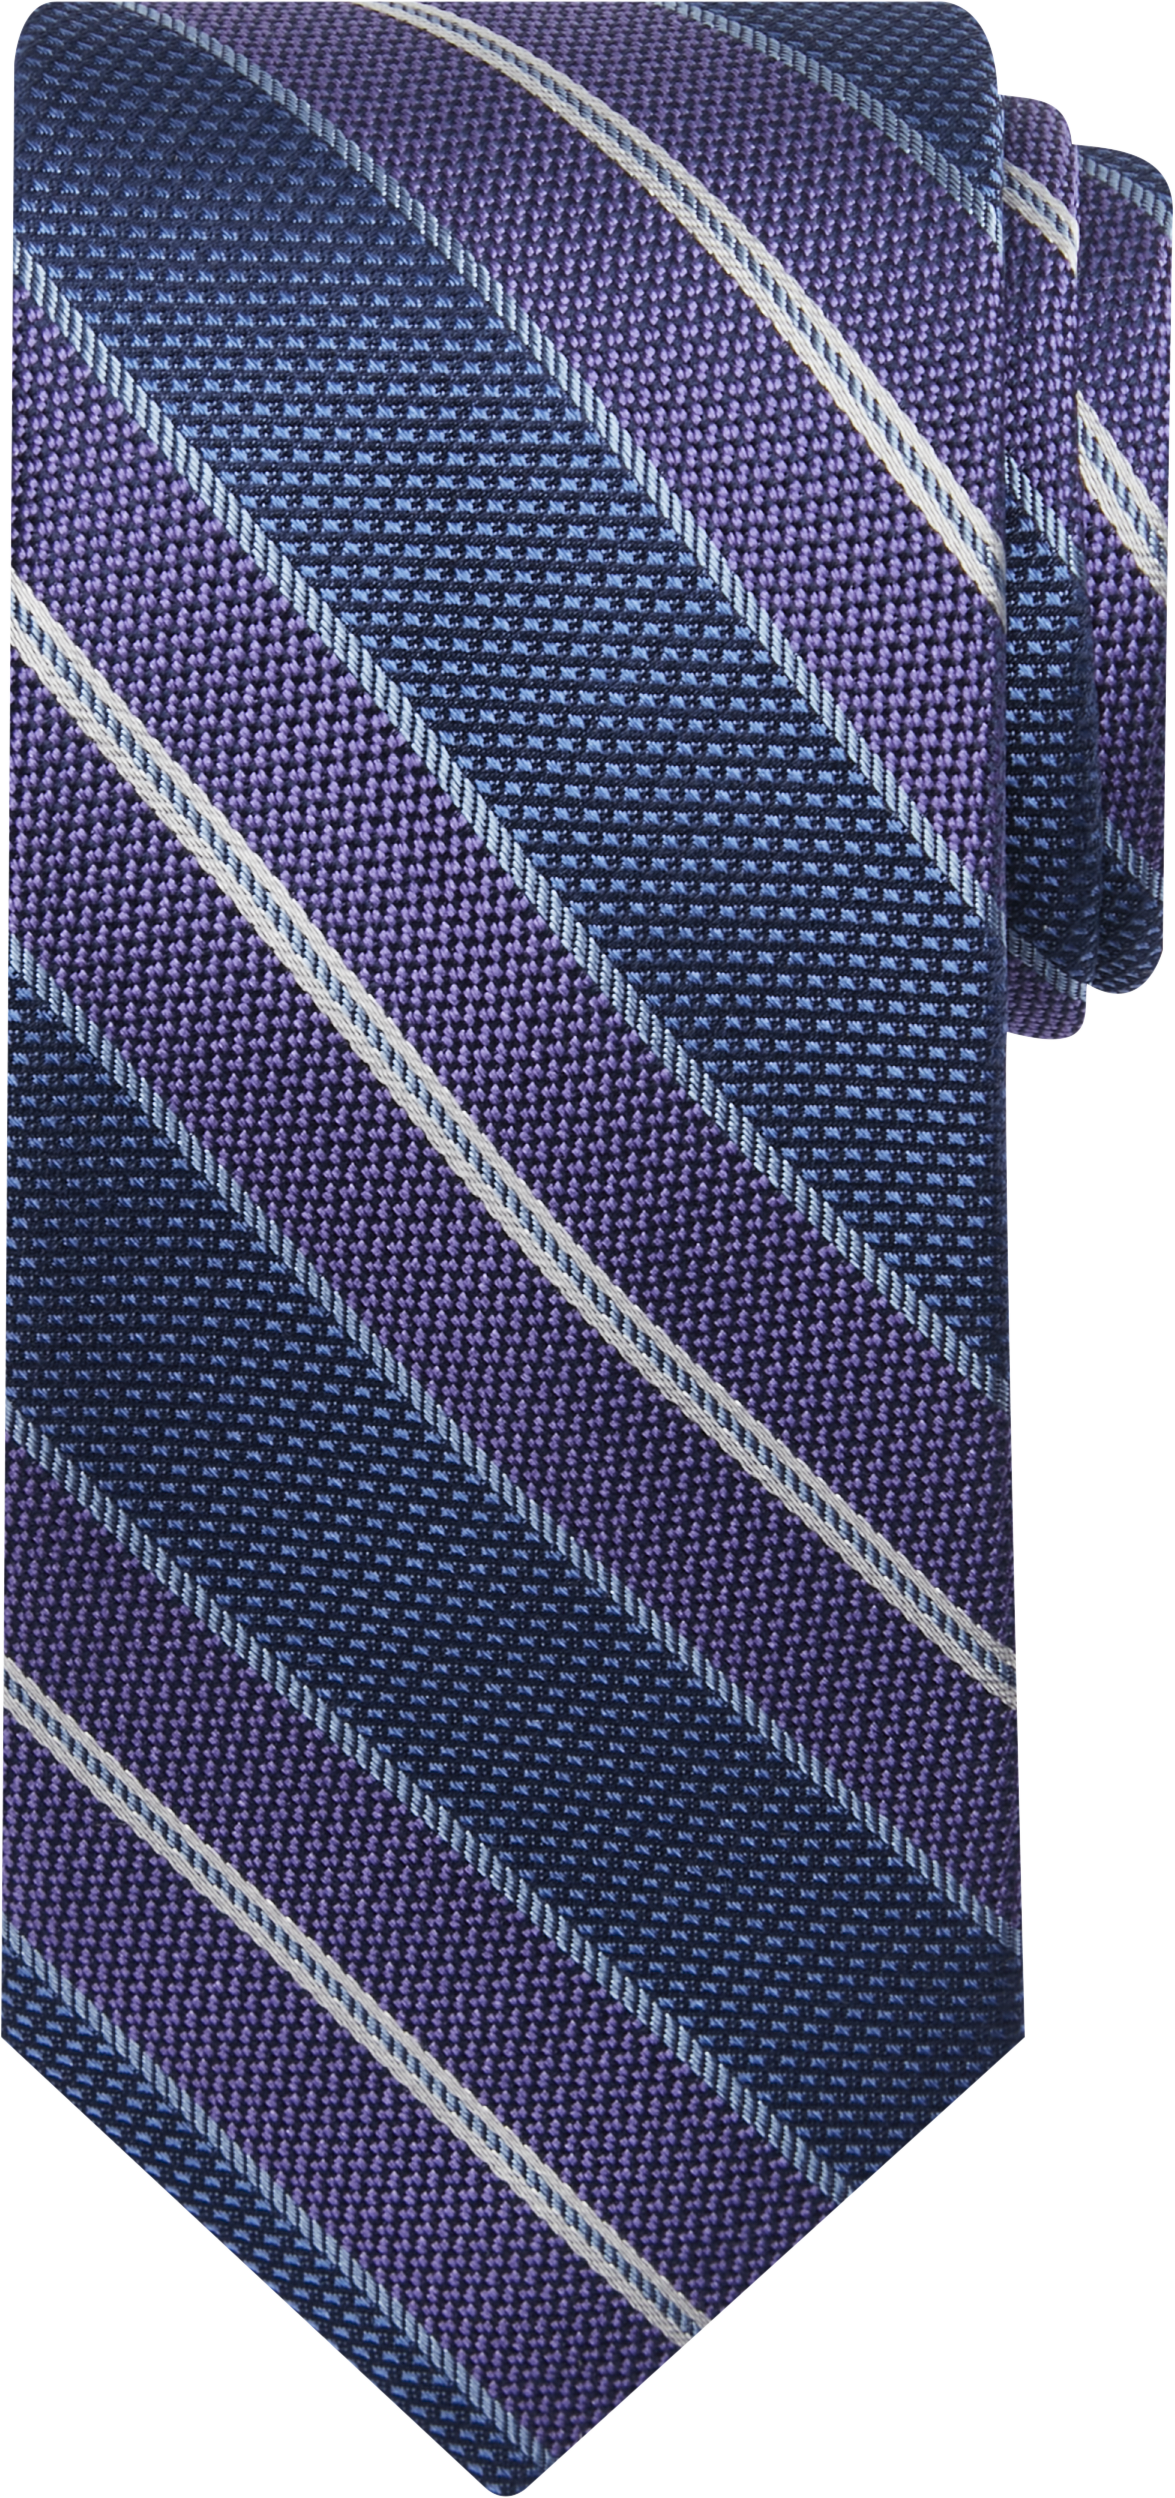 Narrow Textured Stripe Tie